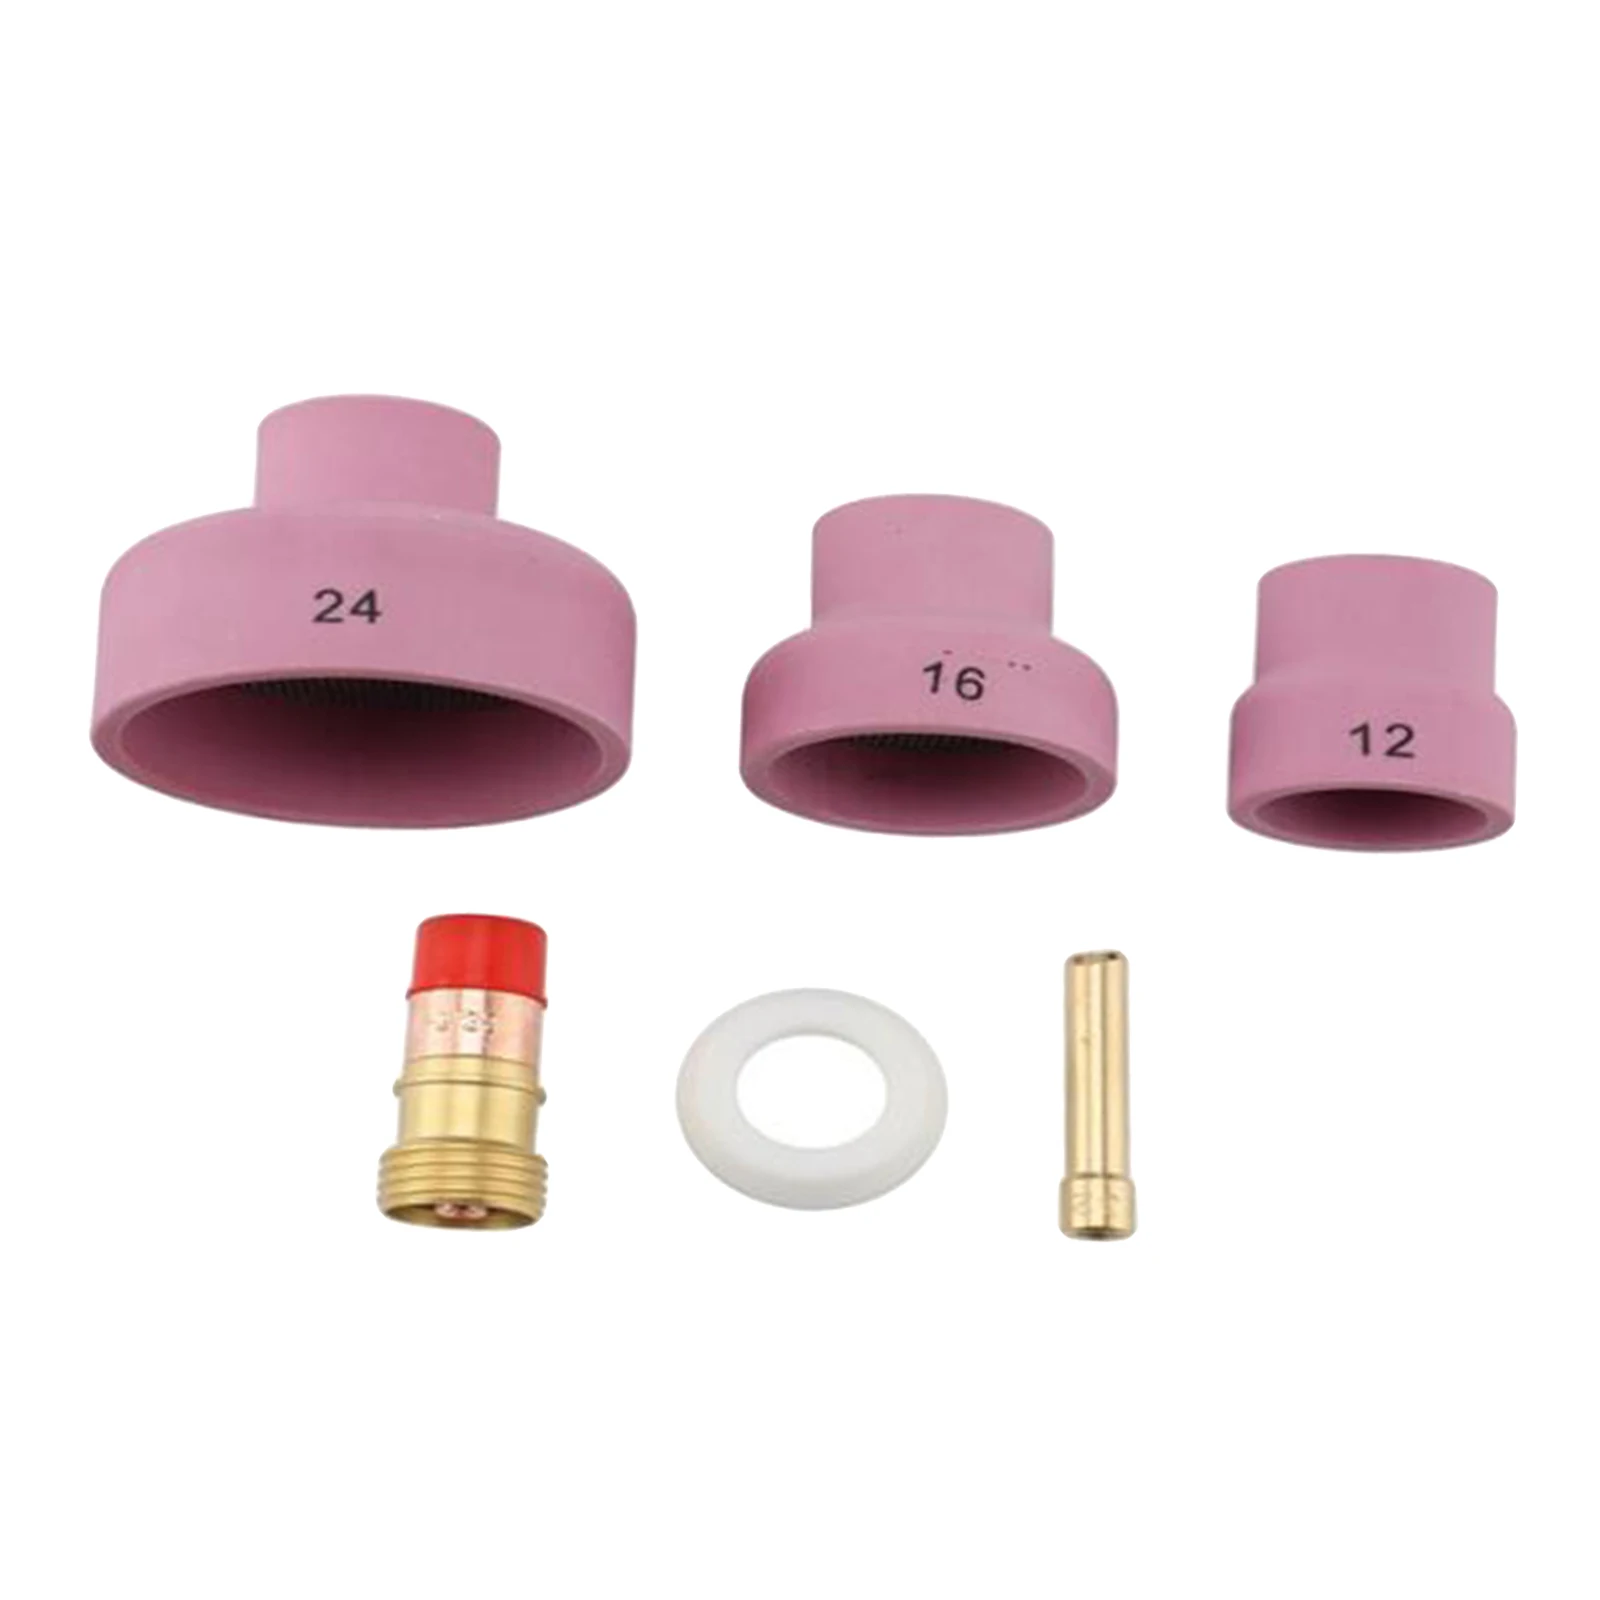 6PCS Ceramic Nozzle Set No.24/16/12 fits for WP 17/18/26, High Efficiency